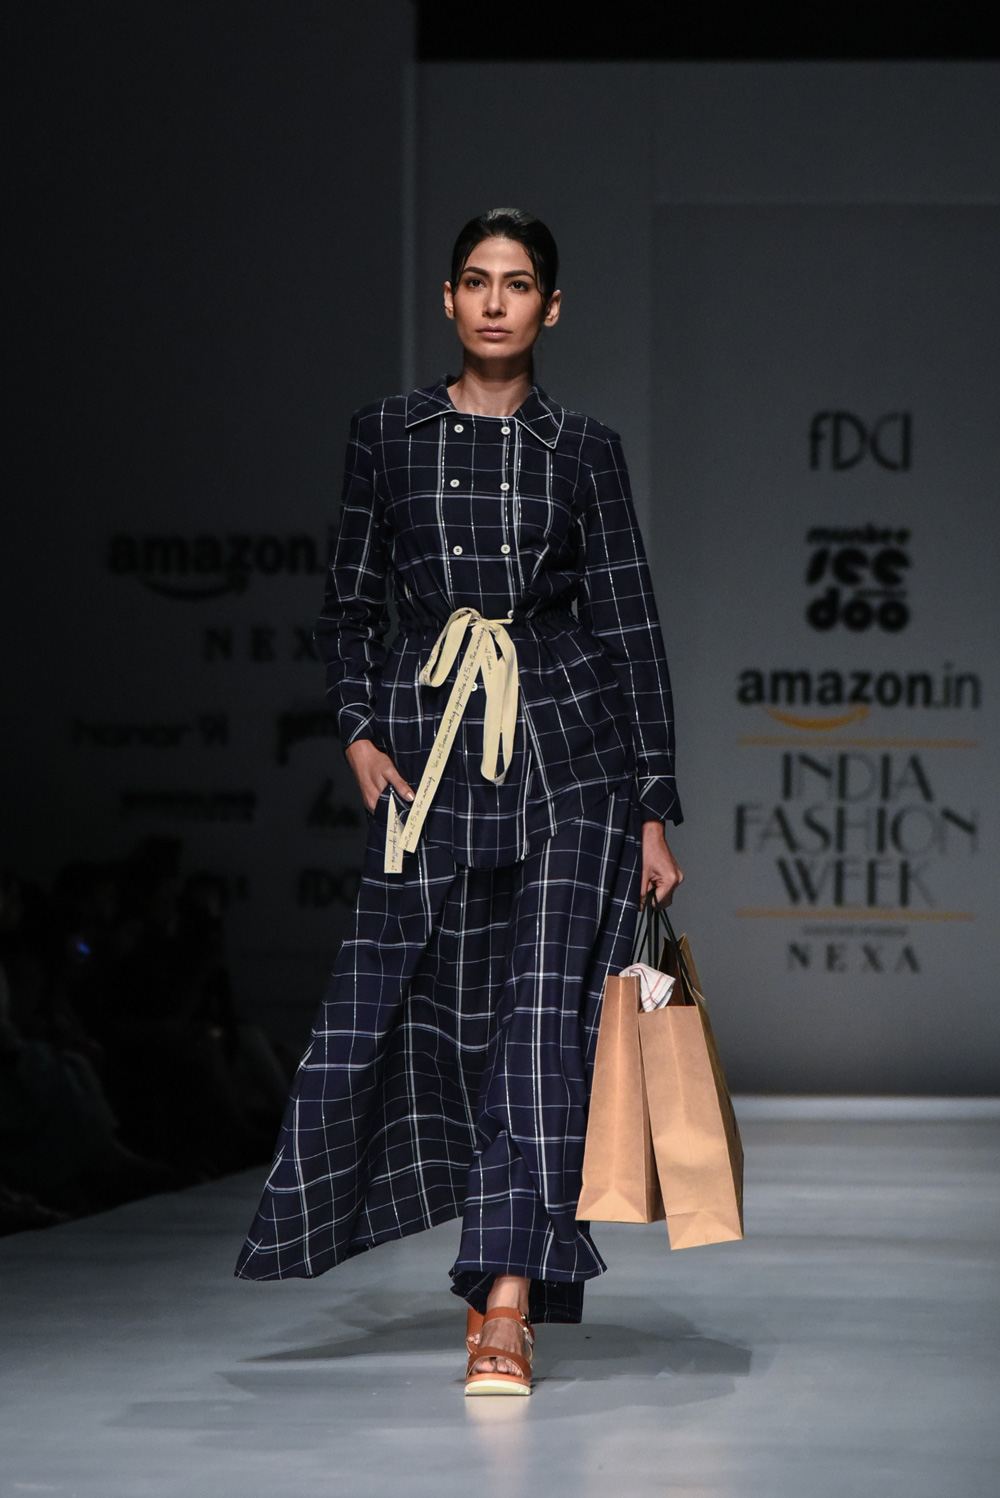 Munkee.See.Munkee.Doo FDCI Amazon India Fashion Week Spring Summer 2018 Look 11